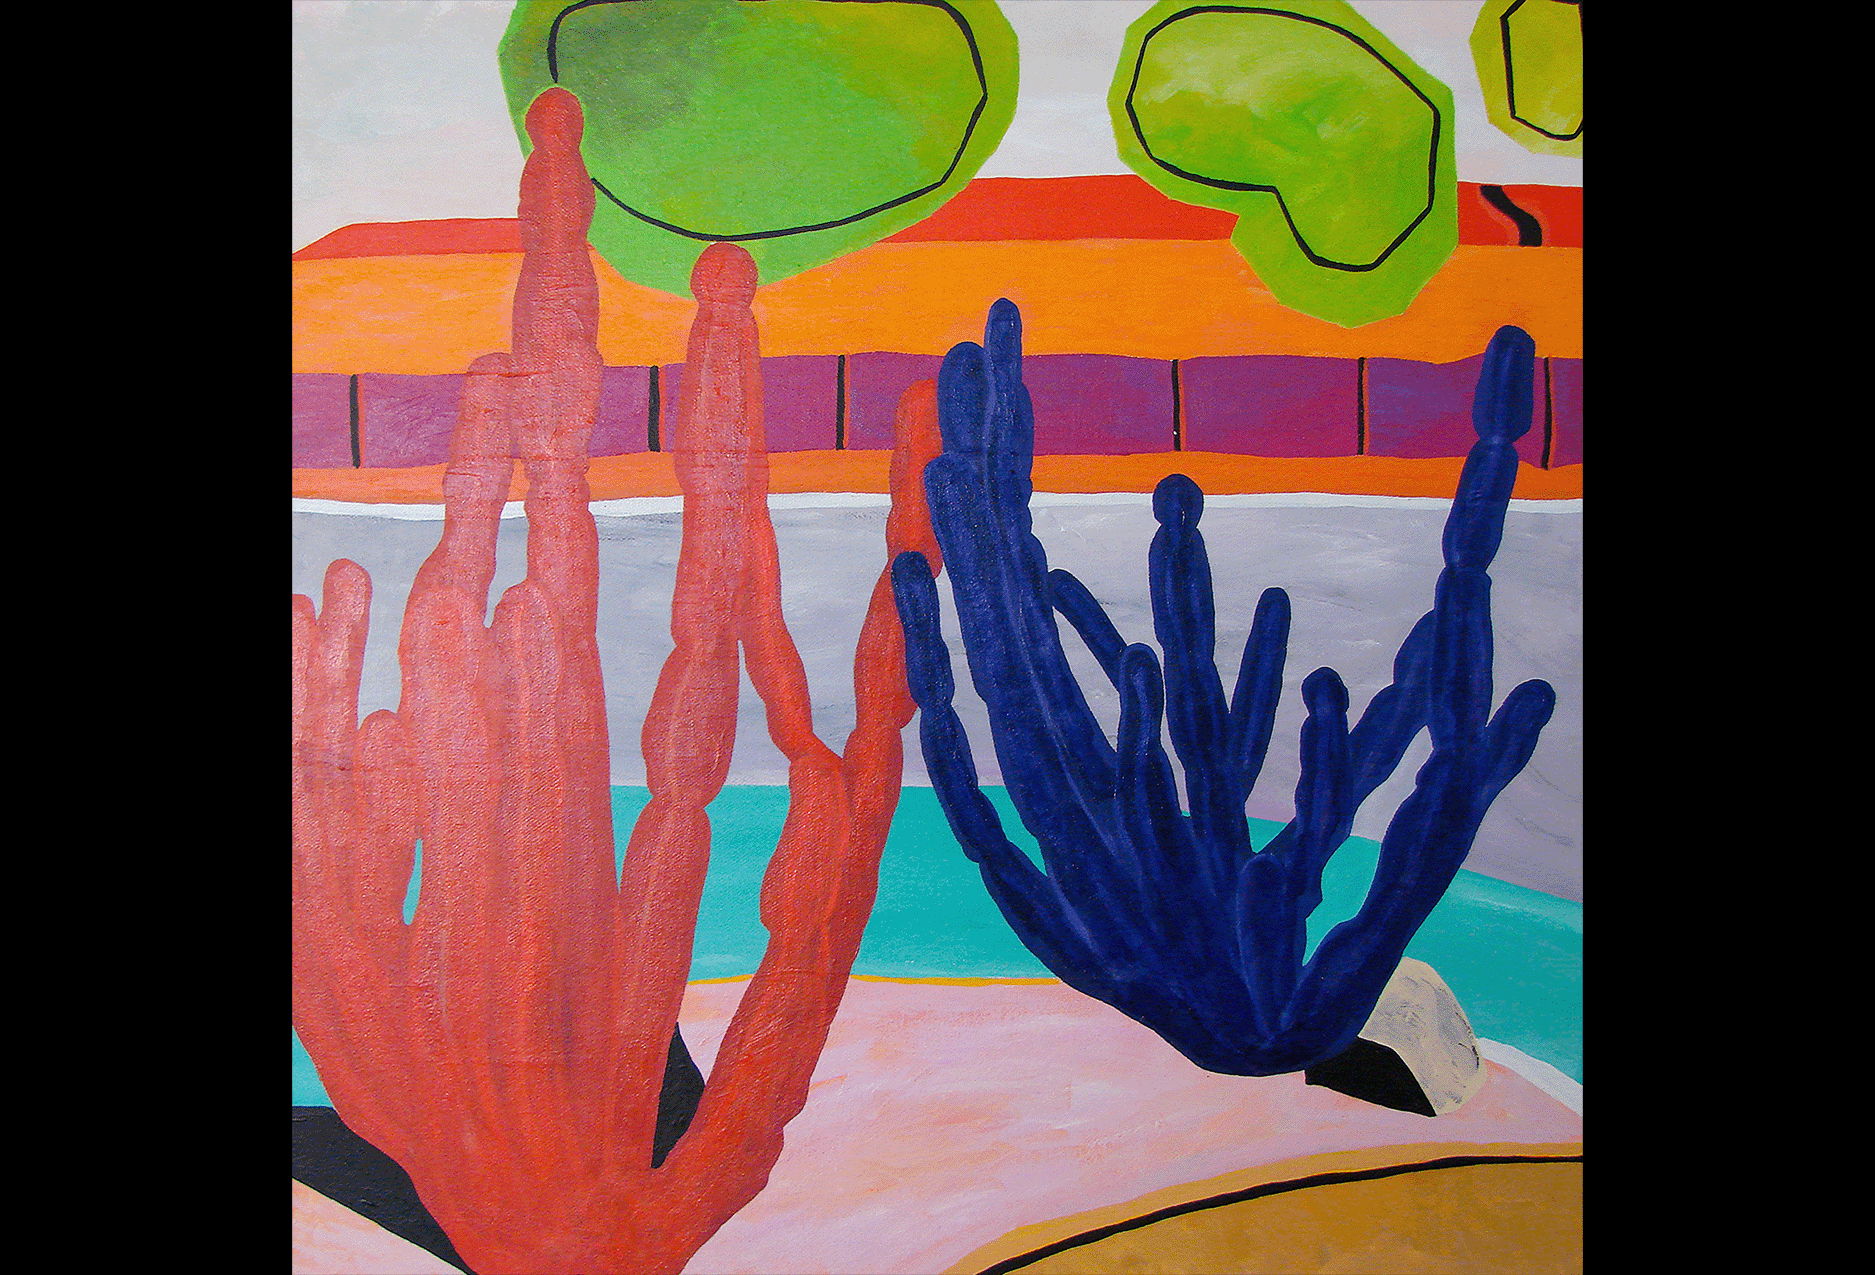 Painting on Canvas of a California Desert Scene